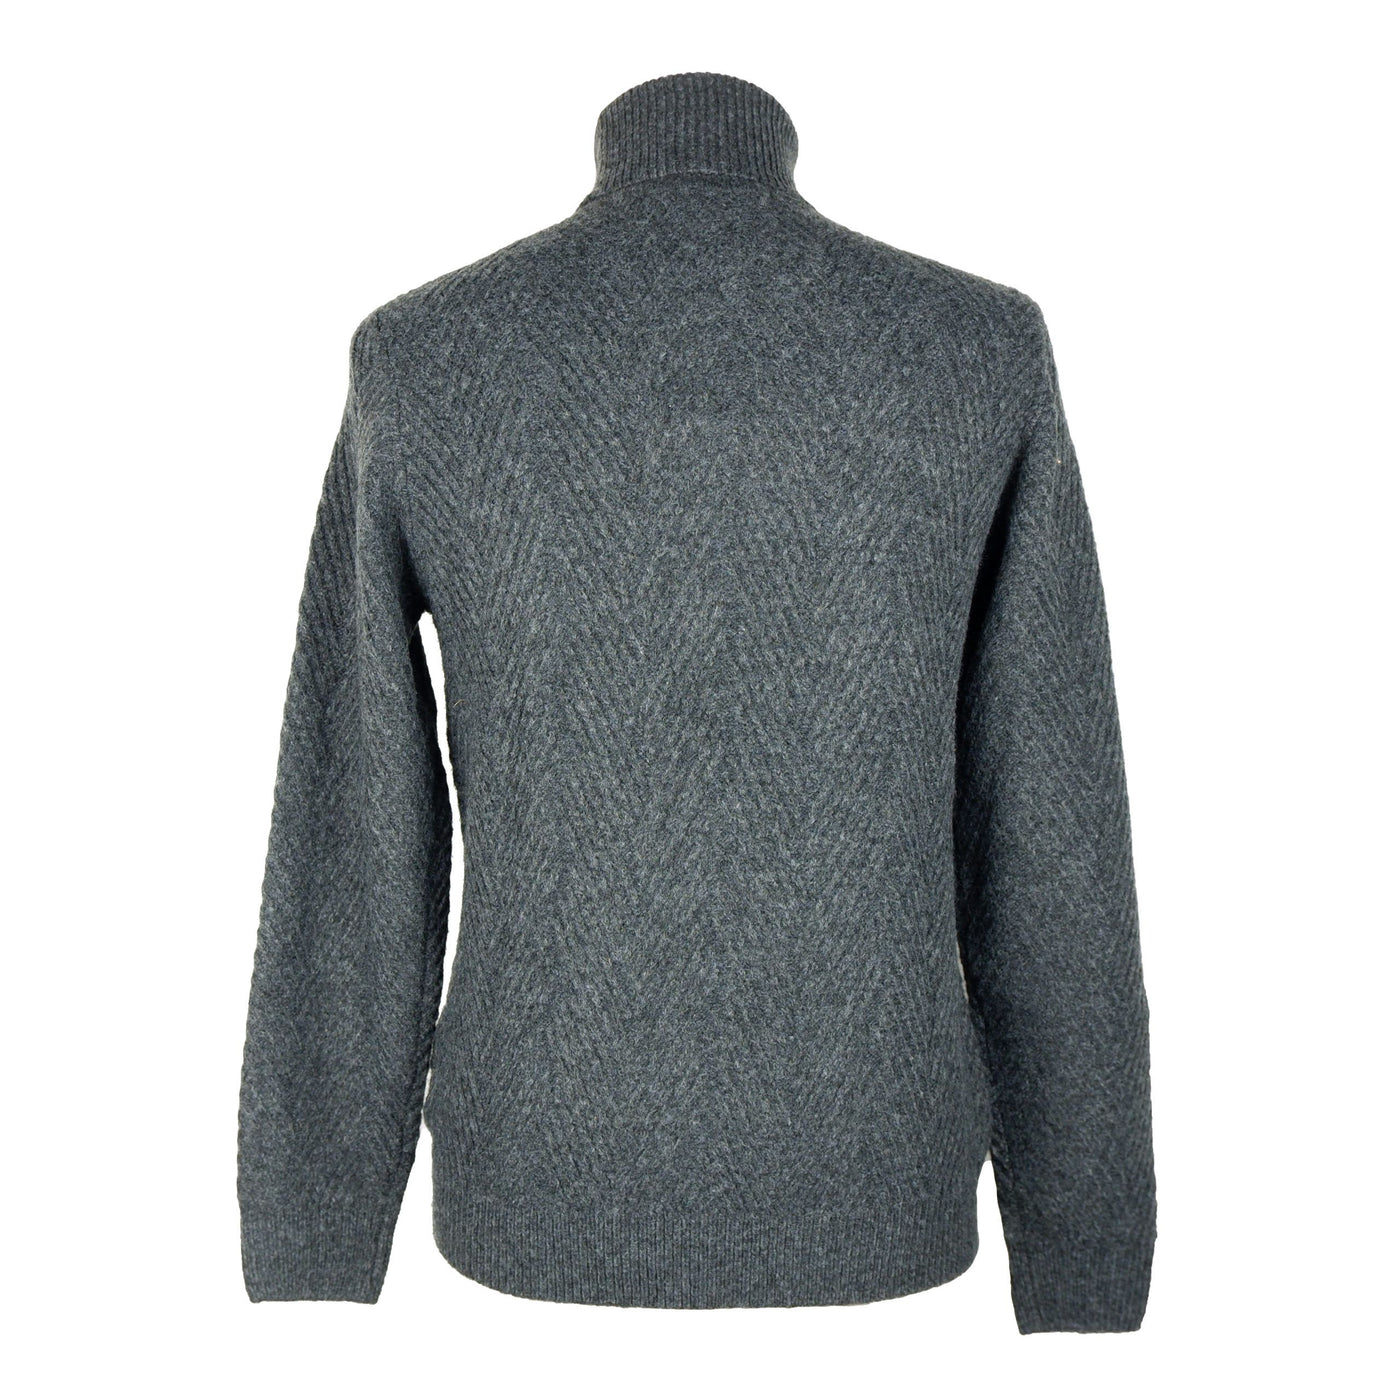 Yes Zee Chic Men's Turtleneck Sweater in Gray